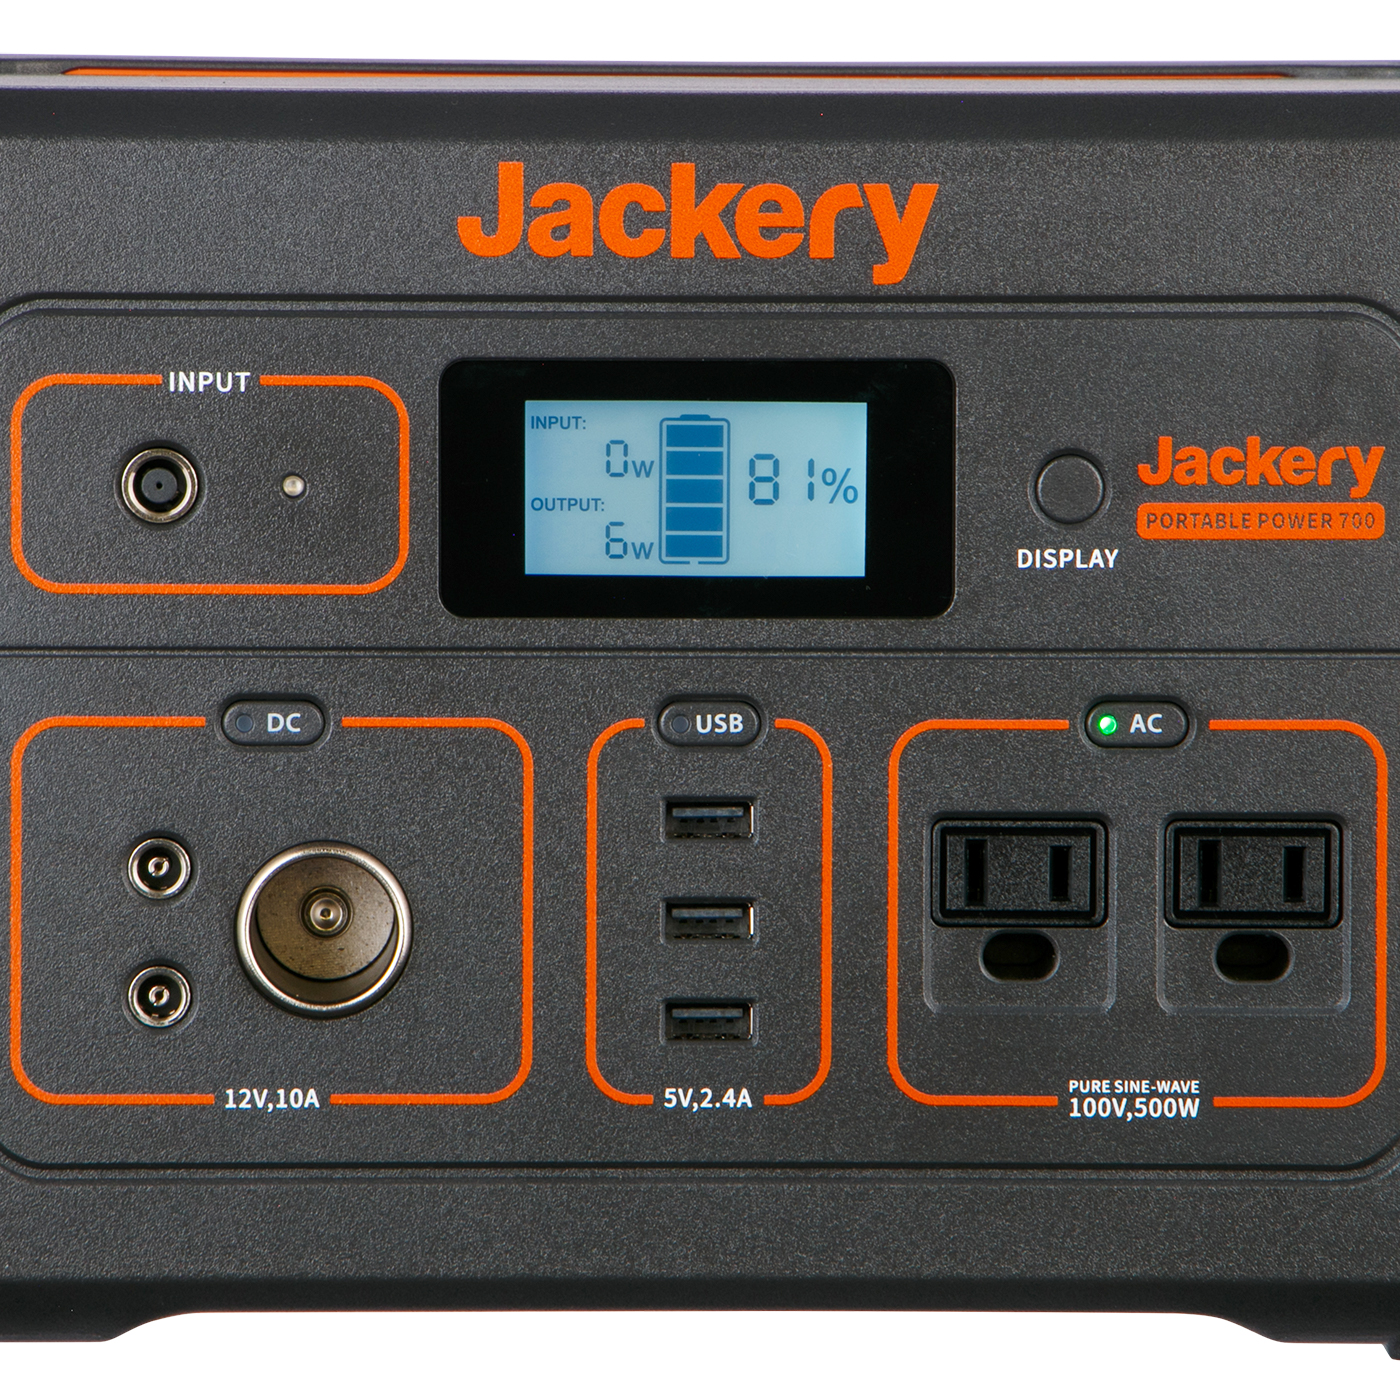 Jackery ポータブル電源 700をレビュー！口コミ・評判をもとに徹底検証 | マイベスト